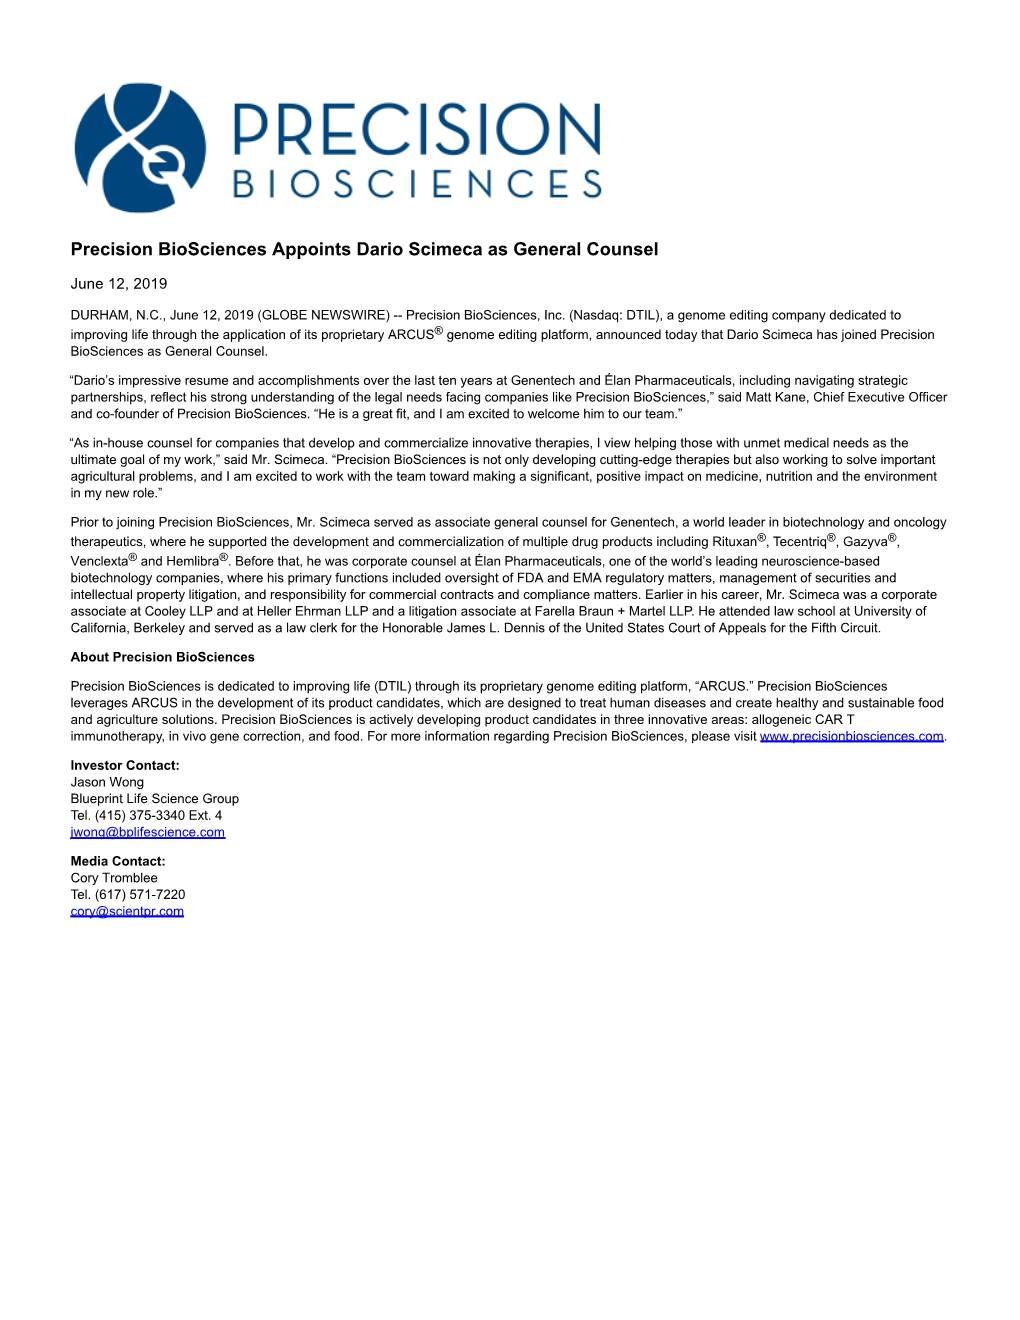 Precision Biosciences Appoints Dario Scimeca As General Counsel